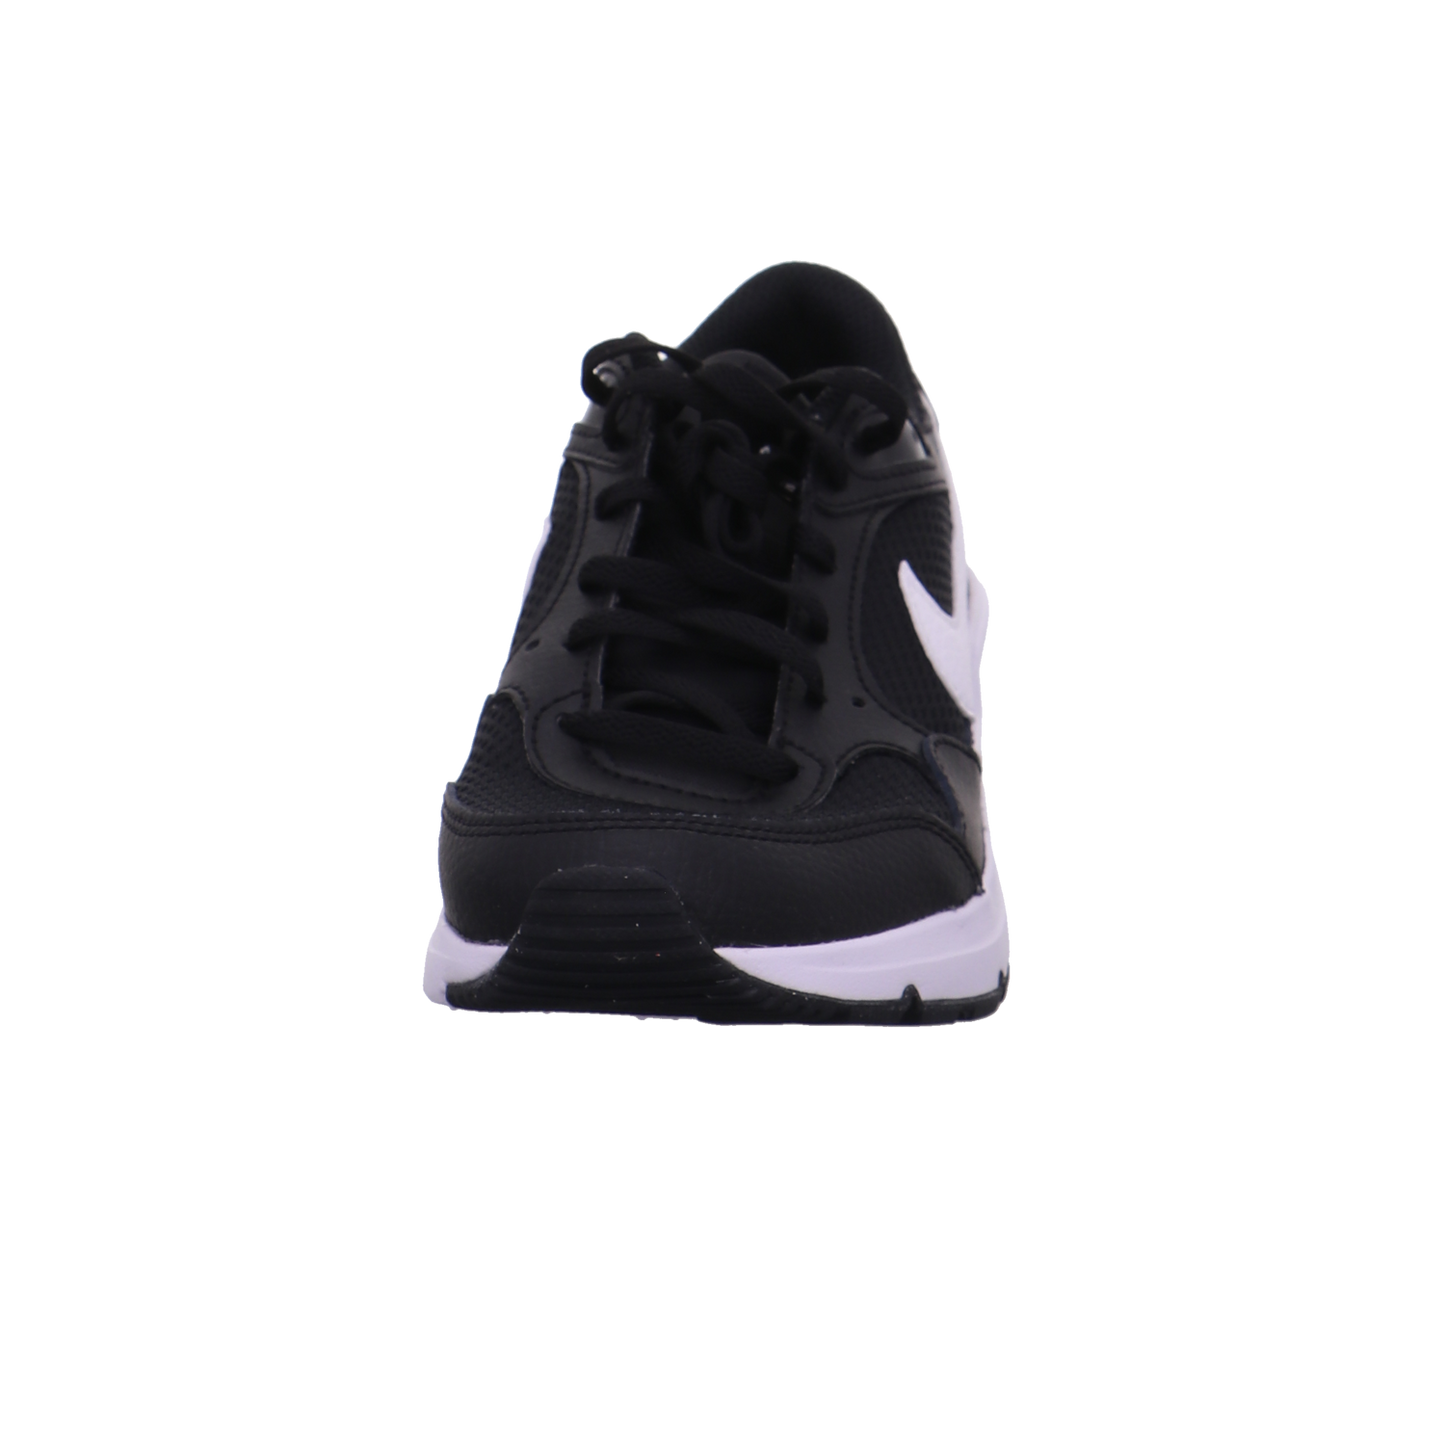 Nike Sneaker schwarz-weiß Bild3